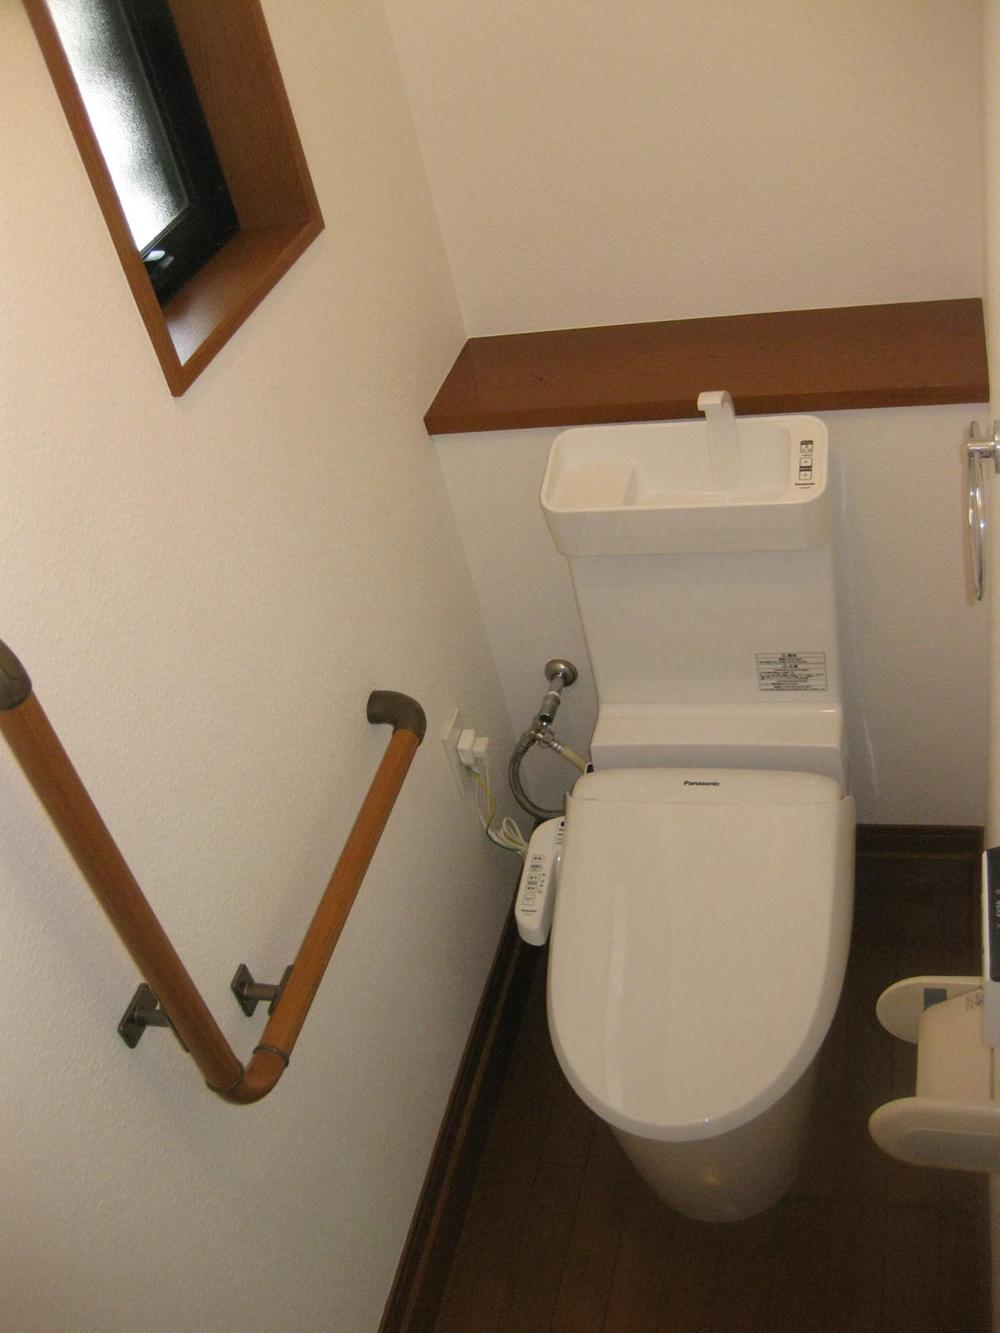 Toilet. The first floor of the toilet Panasonic Co., Ltd. 